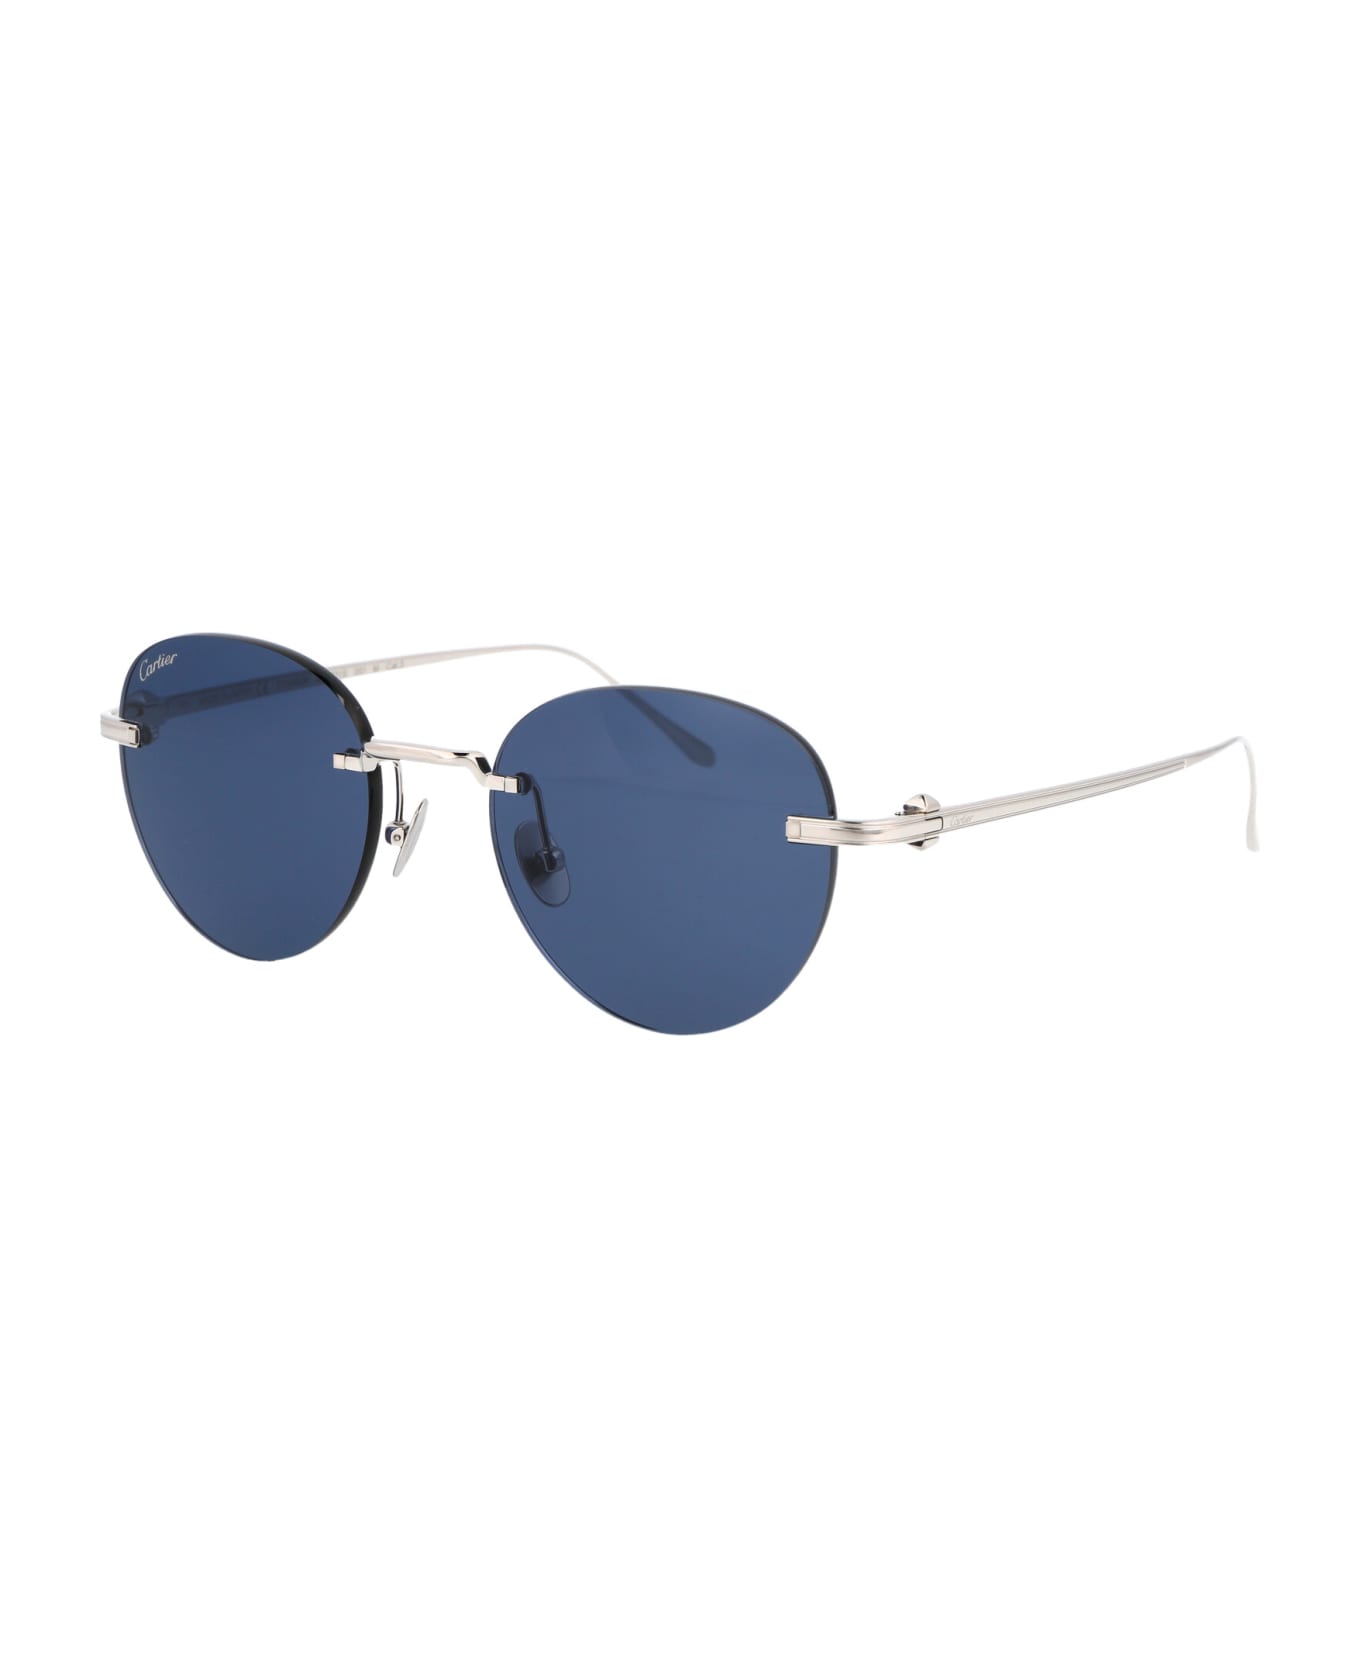 Cartier Eyewear Ct0331s Sunglasses - 001 SILVER SILVER BLUE